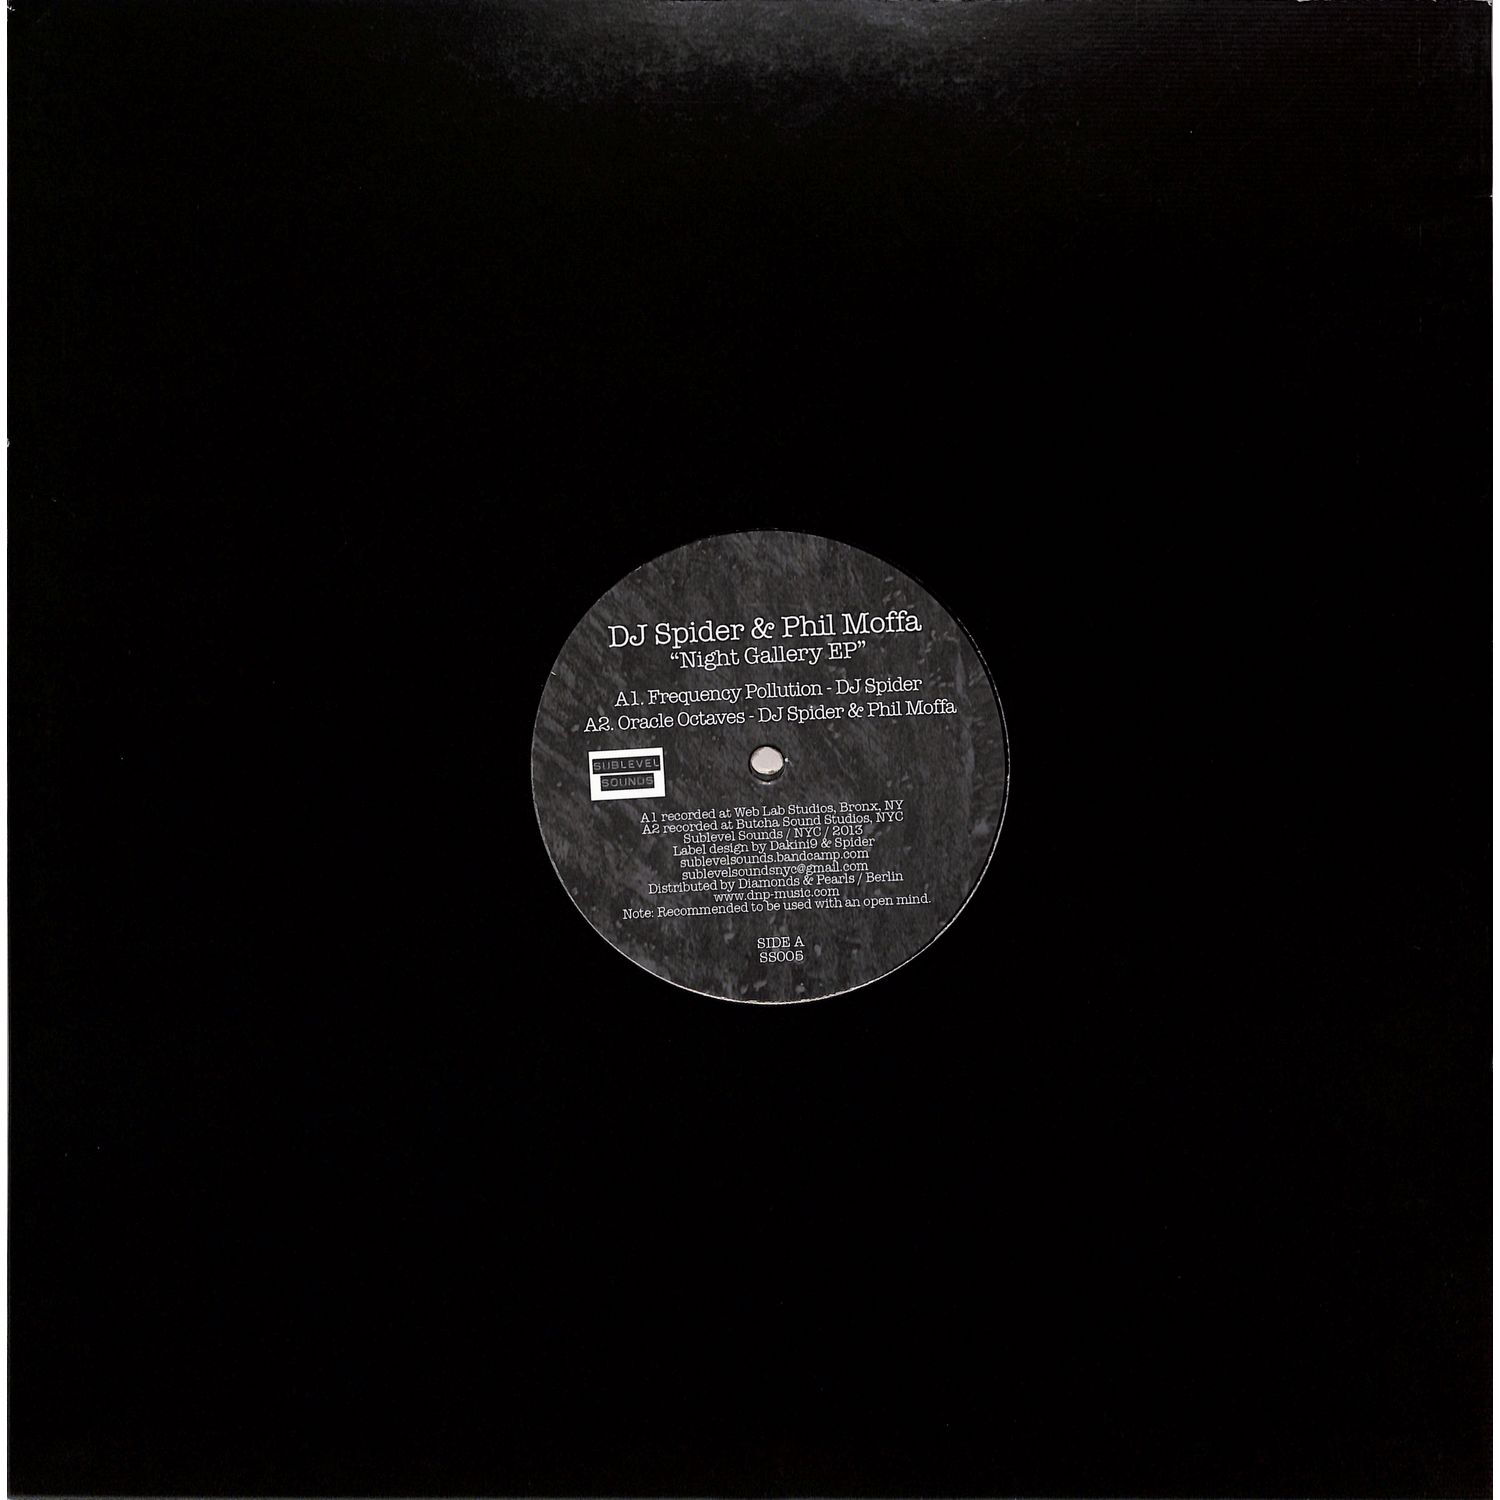 DJ Spider & Phil Moffa - NIGHT GALLERY EP